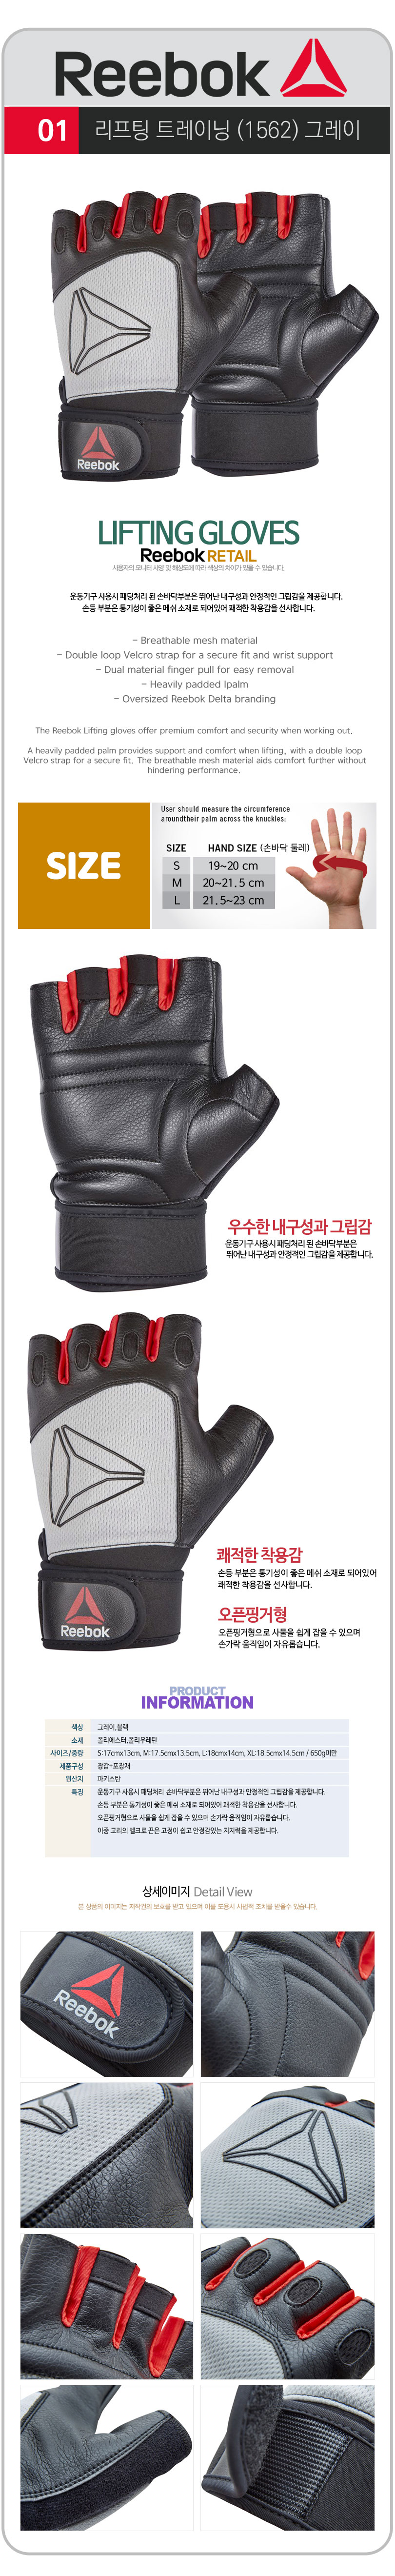 reebok gym gloves with wrist support